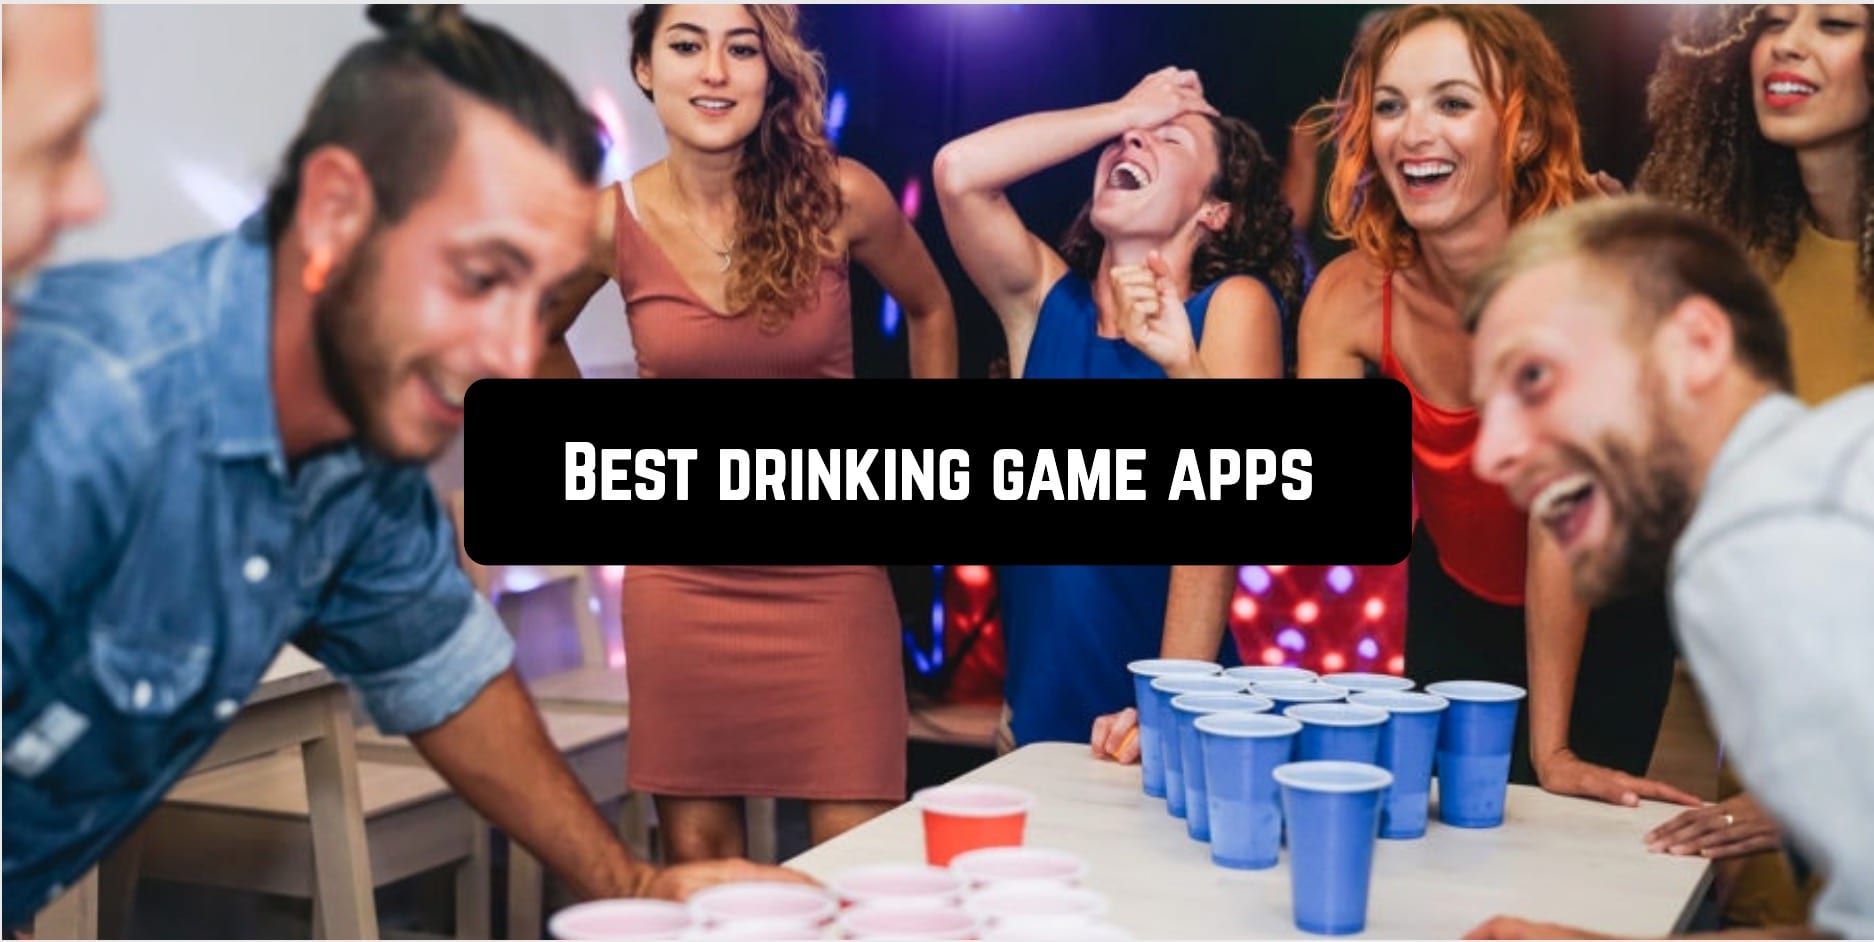 Best drinking game apps